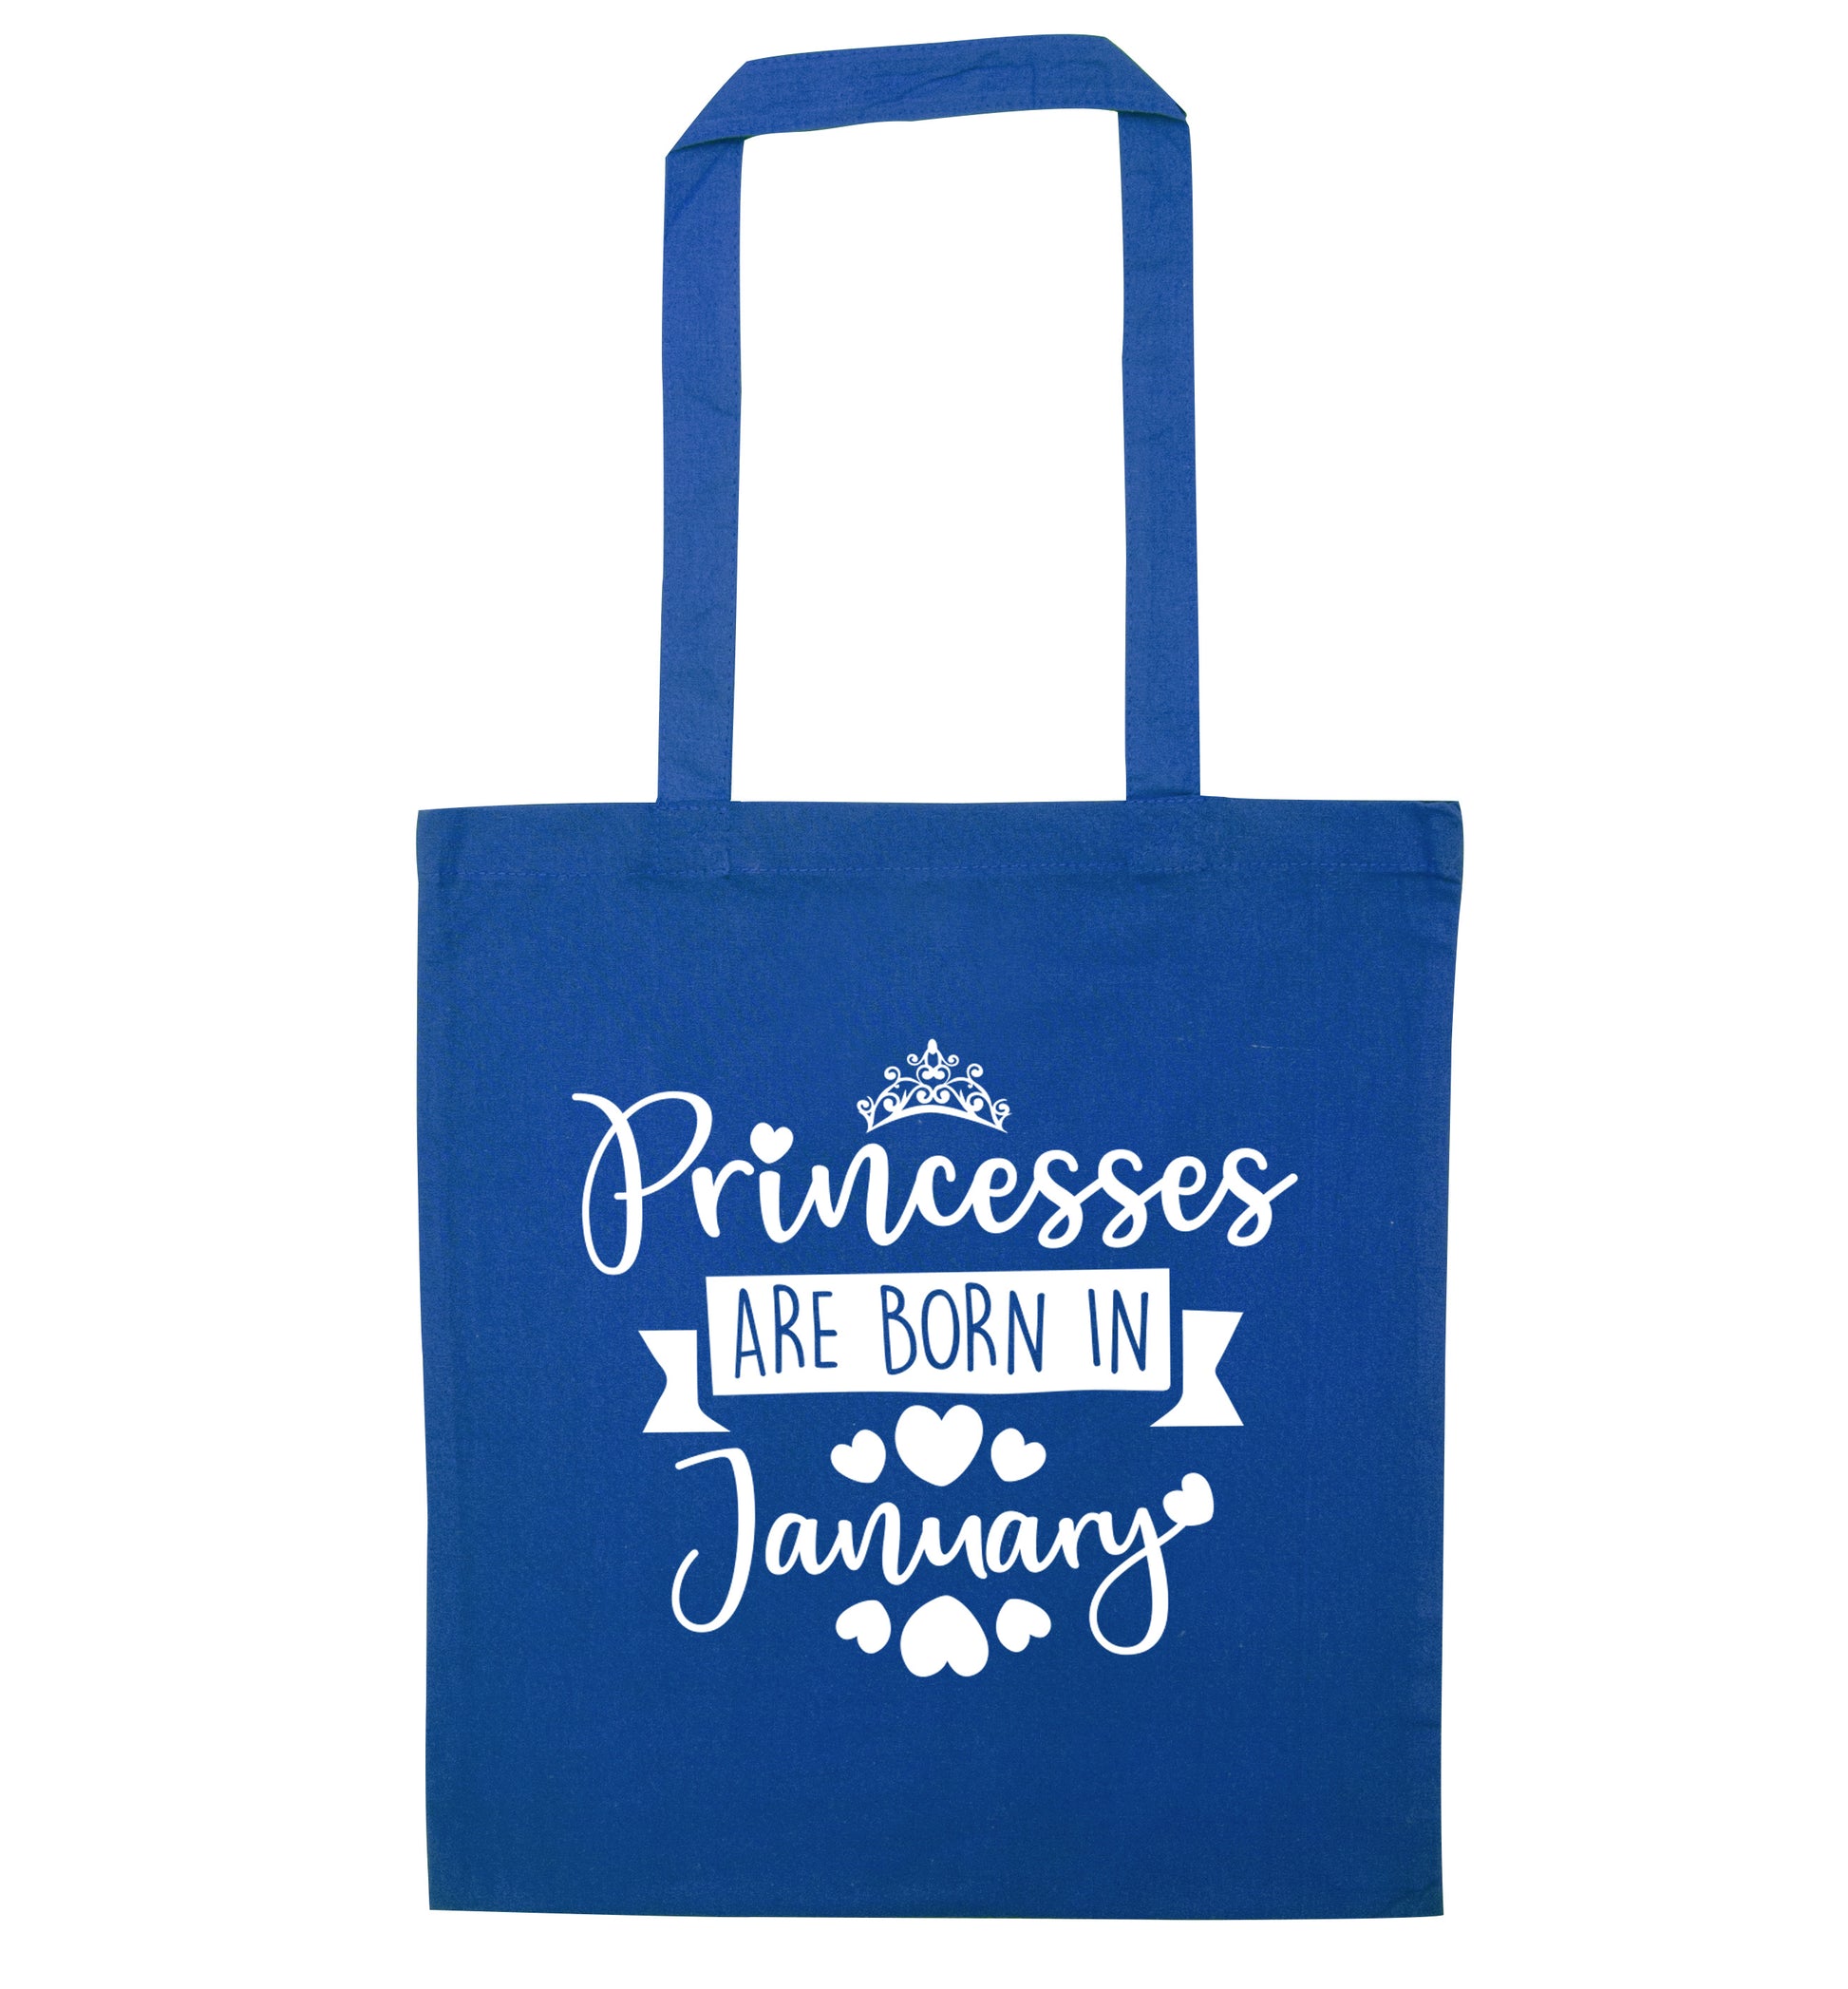 Princesses are born in January blue tote bag